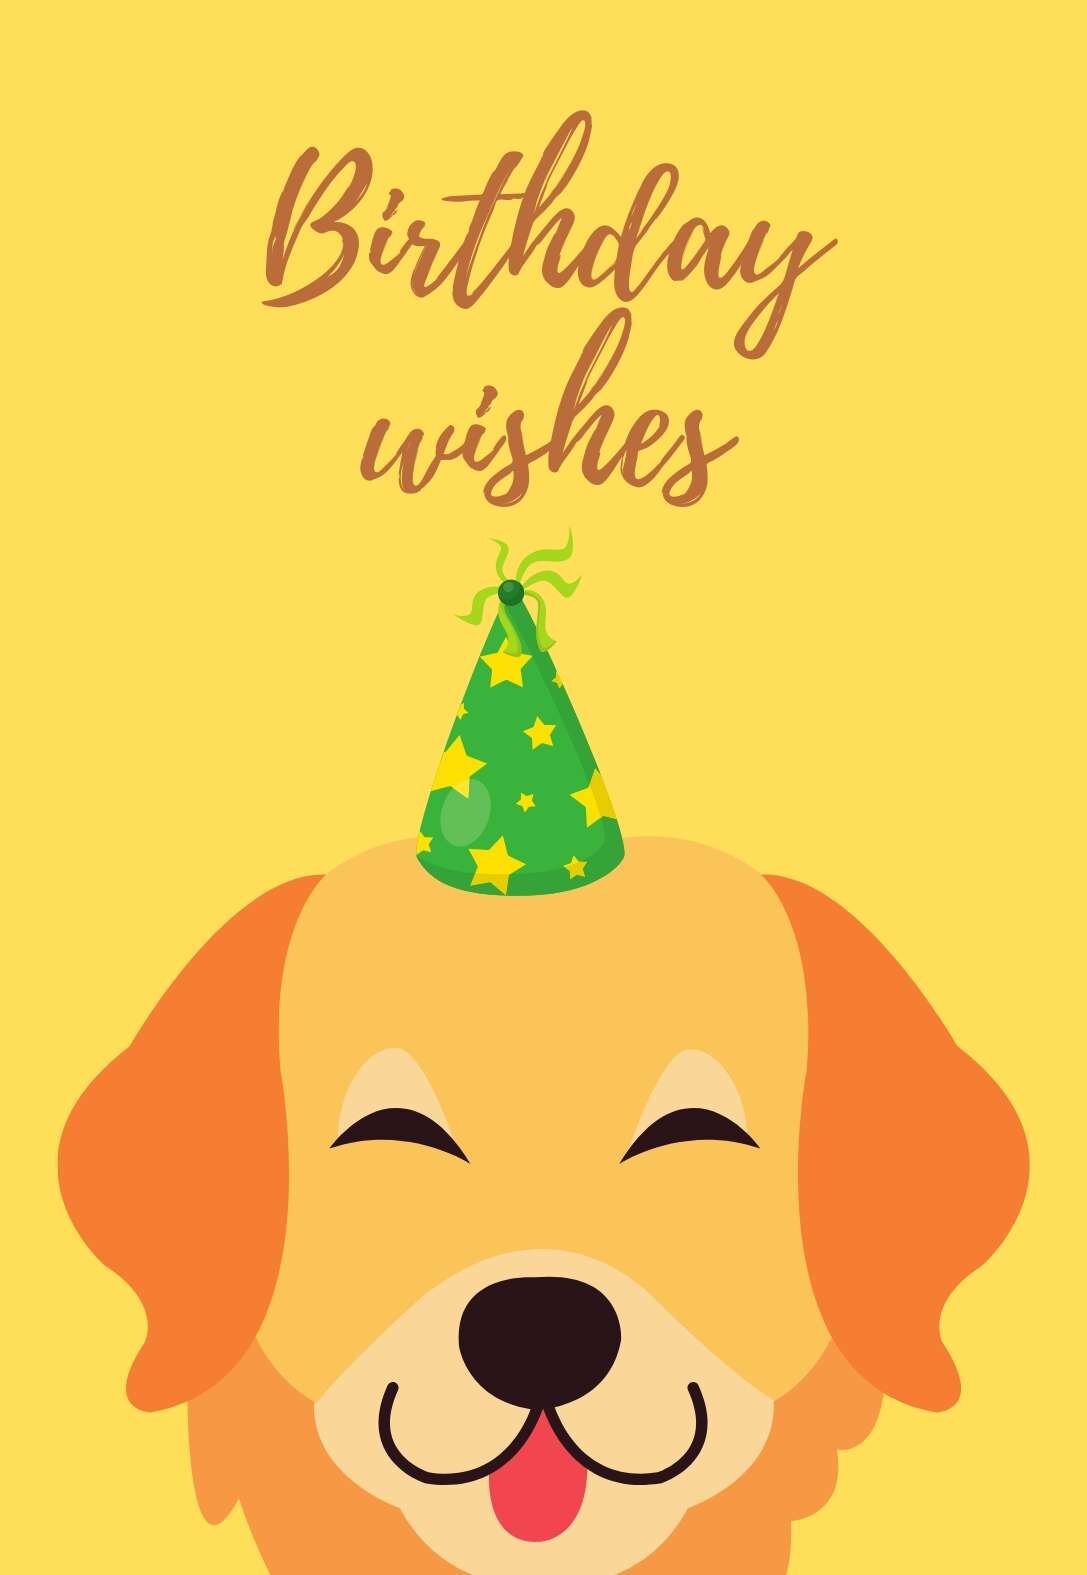 Printable Dog Birthday Cards Read iesanfelipe edu pe